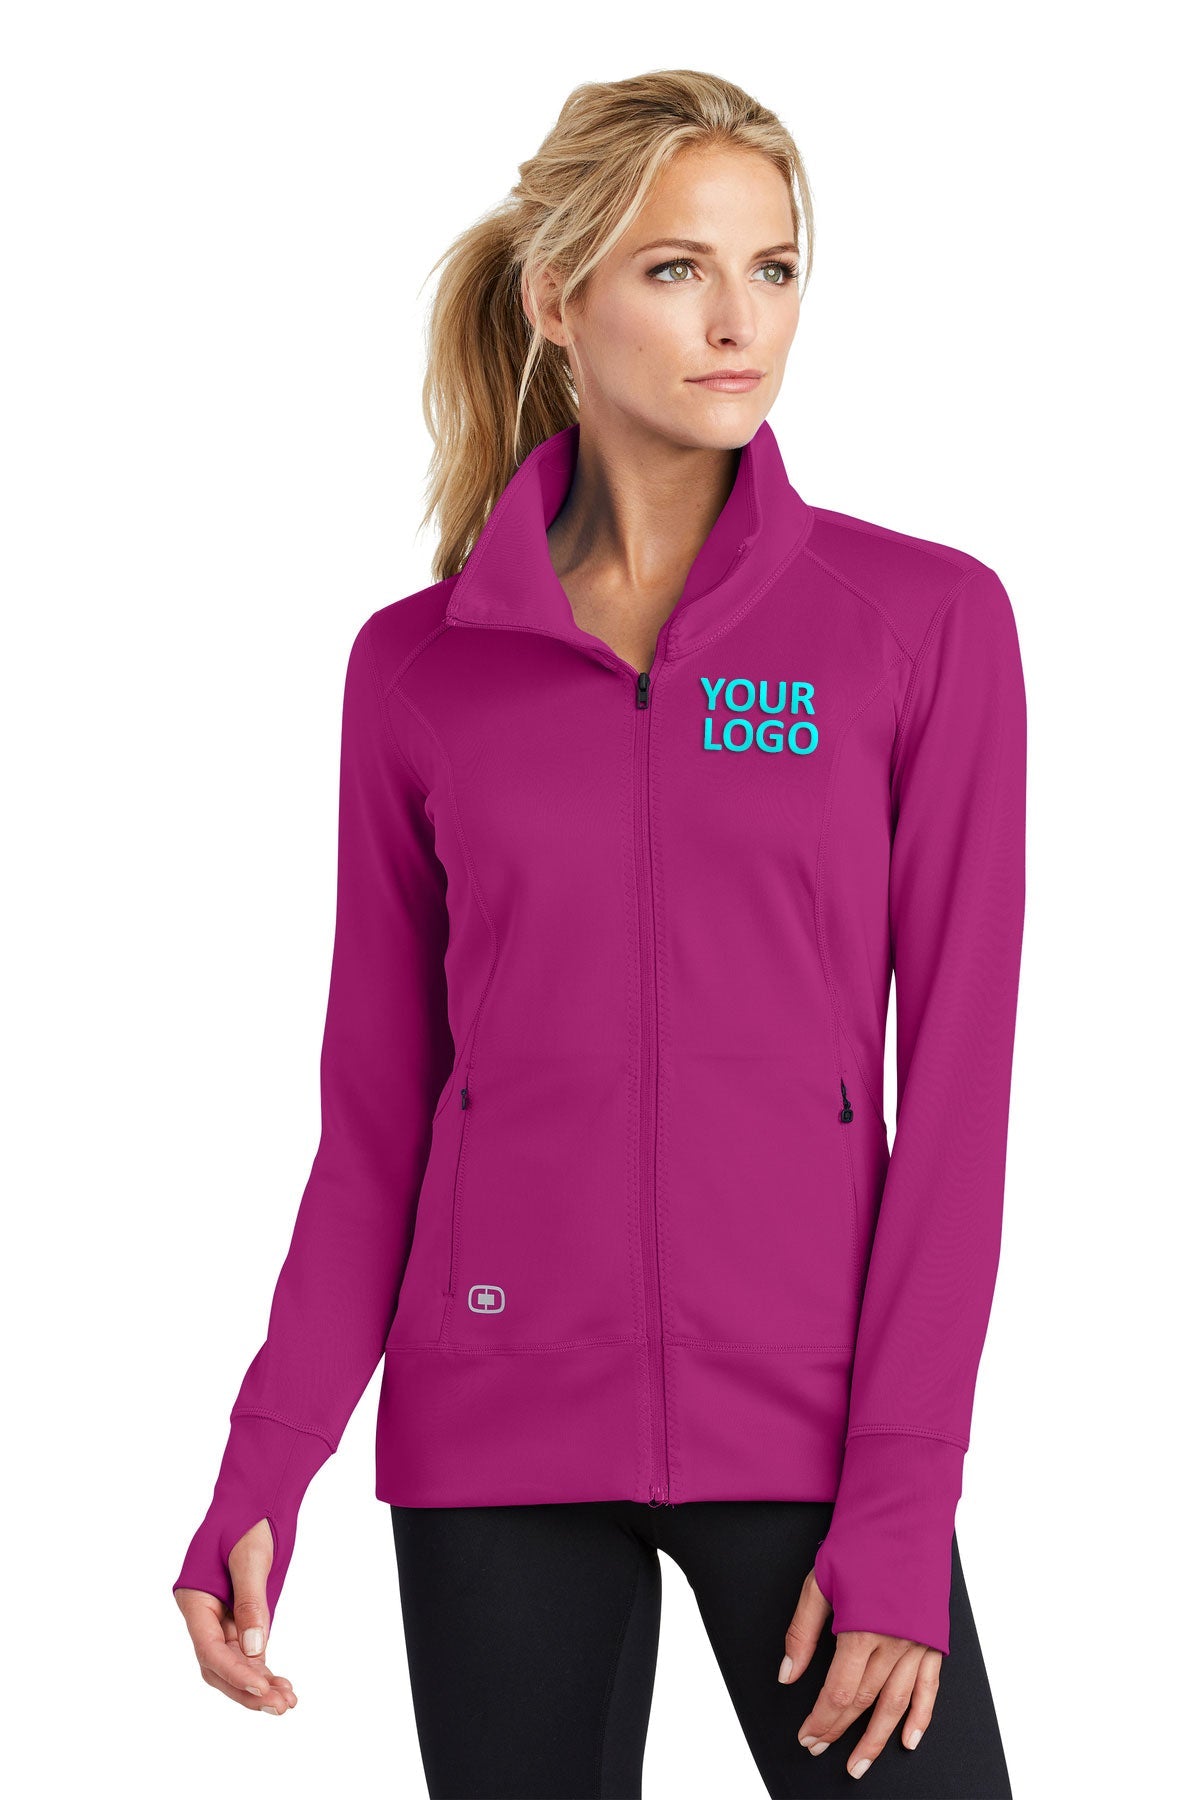 OGIO Endurance Flush Pink LOE700 jackets with company logo